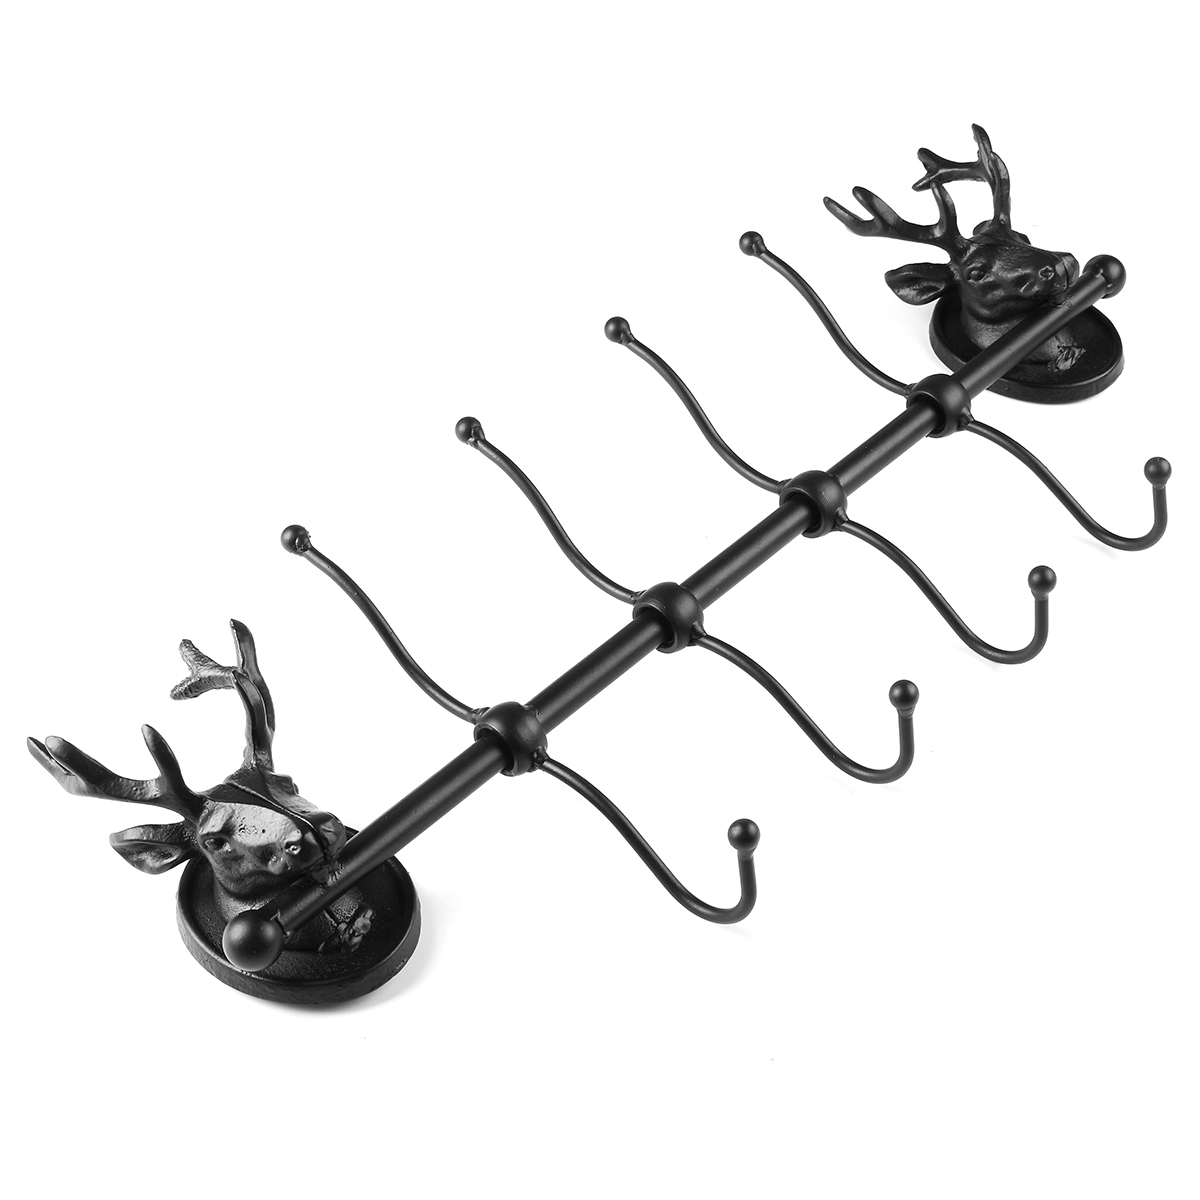 Antique-Animal-Head-Deer-Stag-Hook-Wall-Mount-Hanger-Cast-Iron-Rack-Holder-Home-Decor-1267412-1